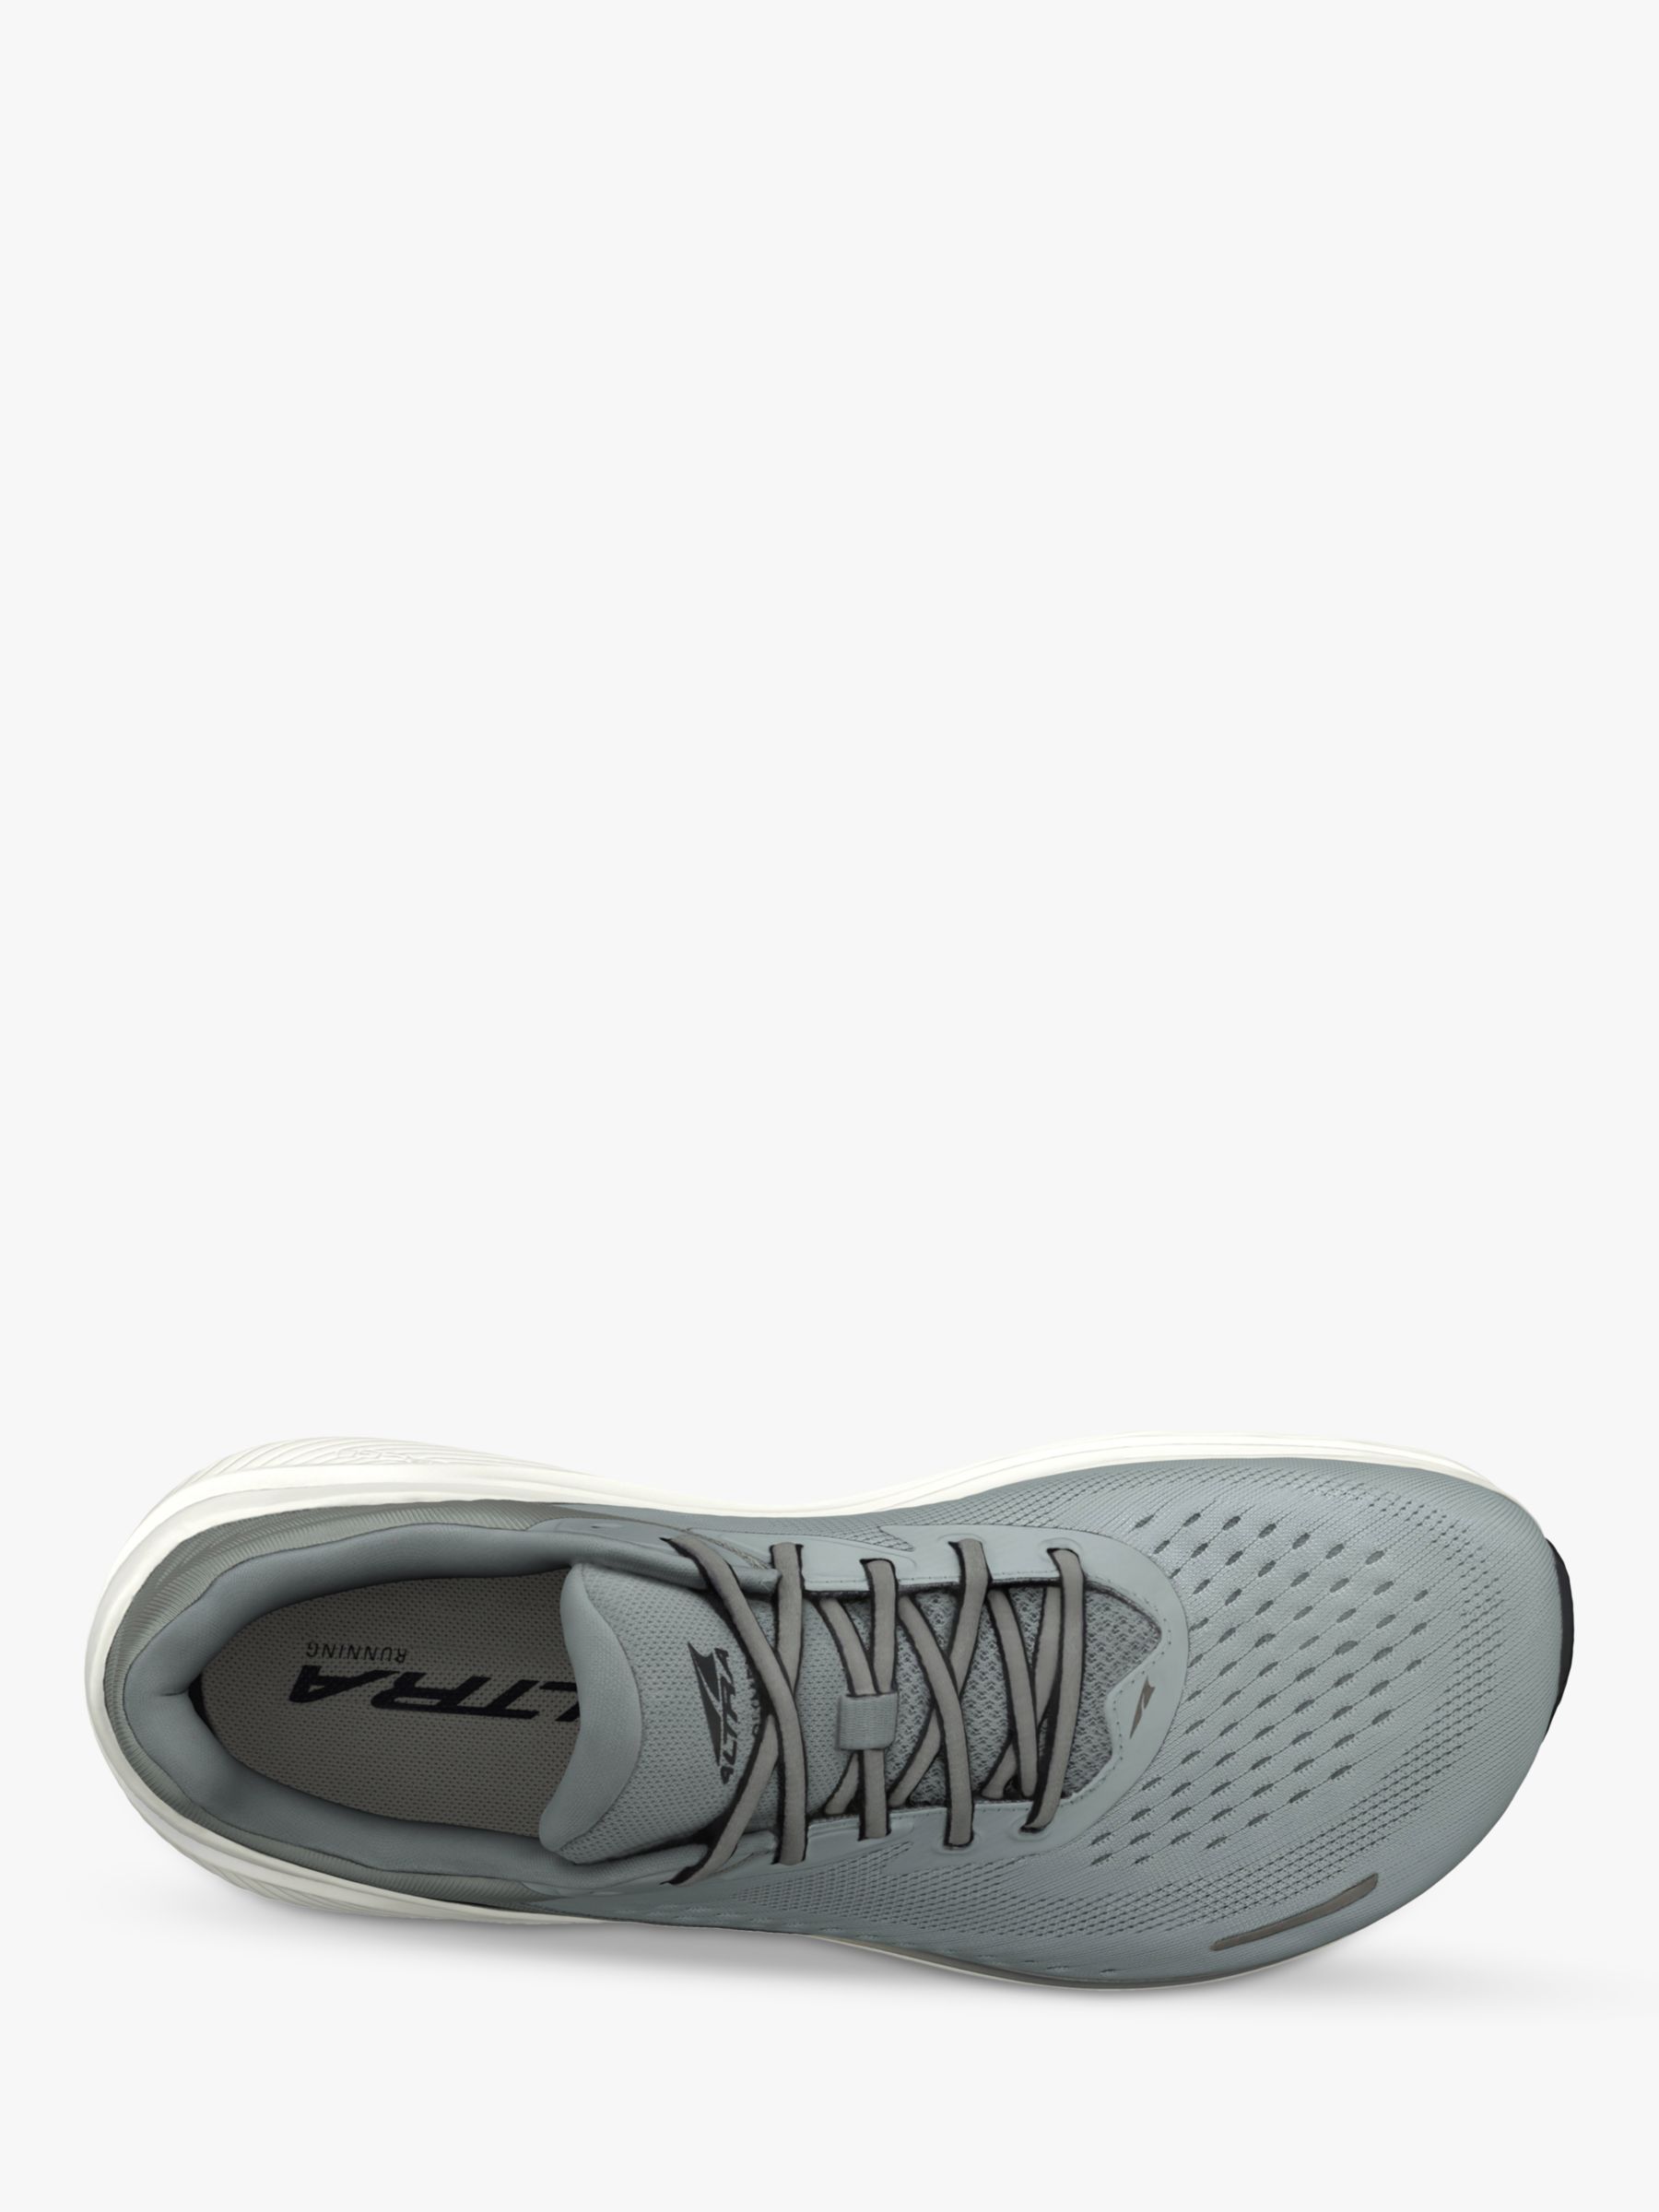 Altra VIA Olympus 2 Men's Running Shoes, Gray, 11